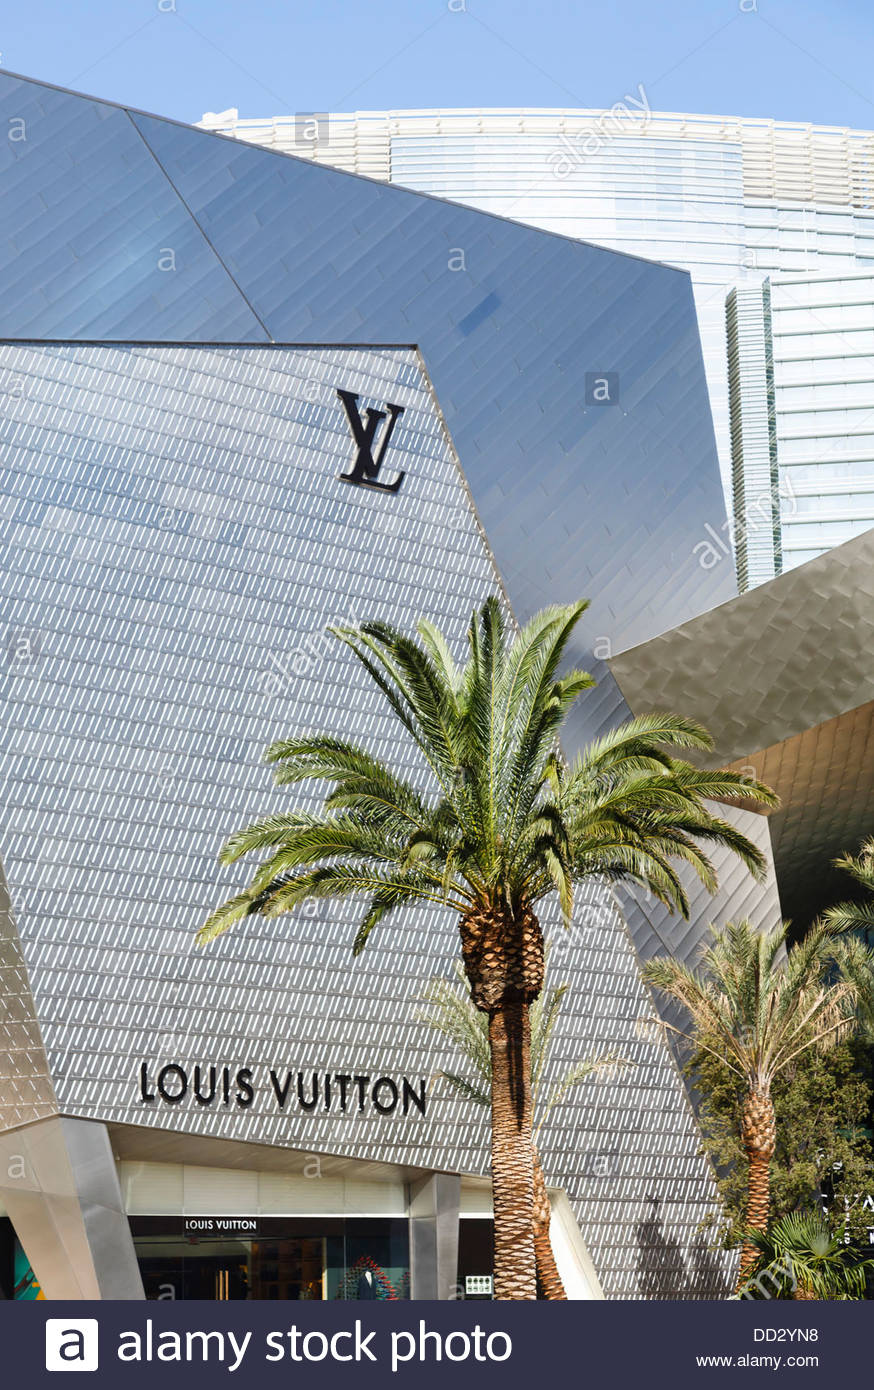 Louis Vuitton Logo Stock Photos & Louis Vuitton Logo Stock Images - Alamy